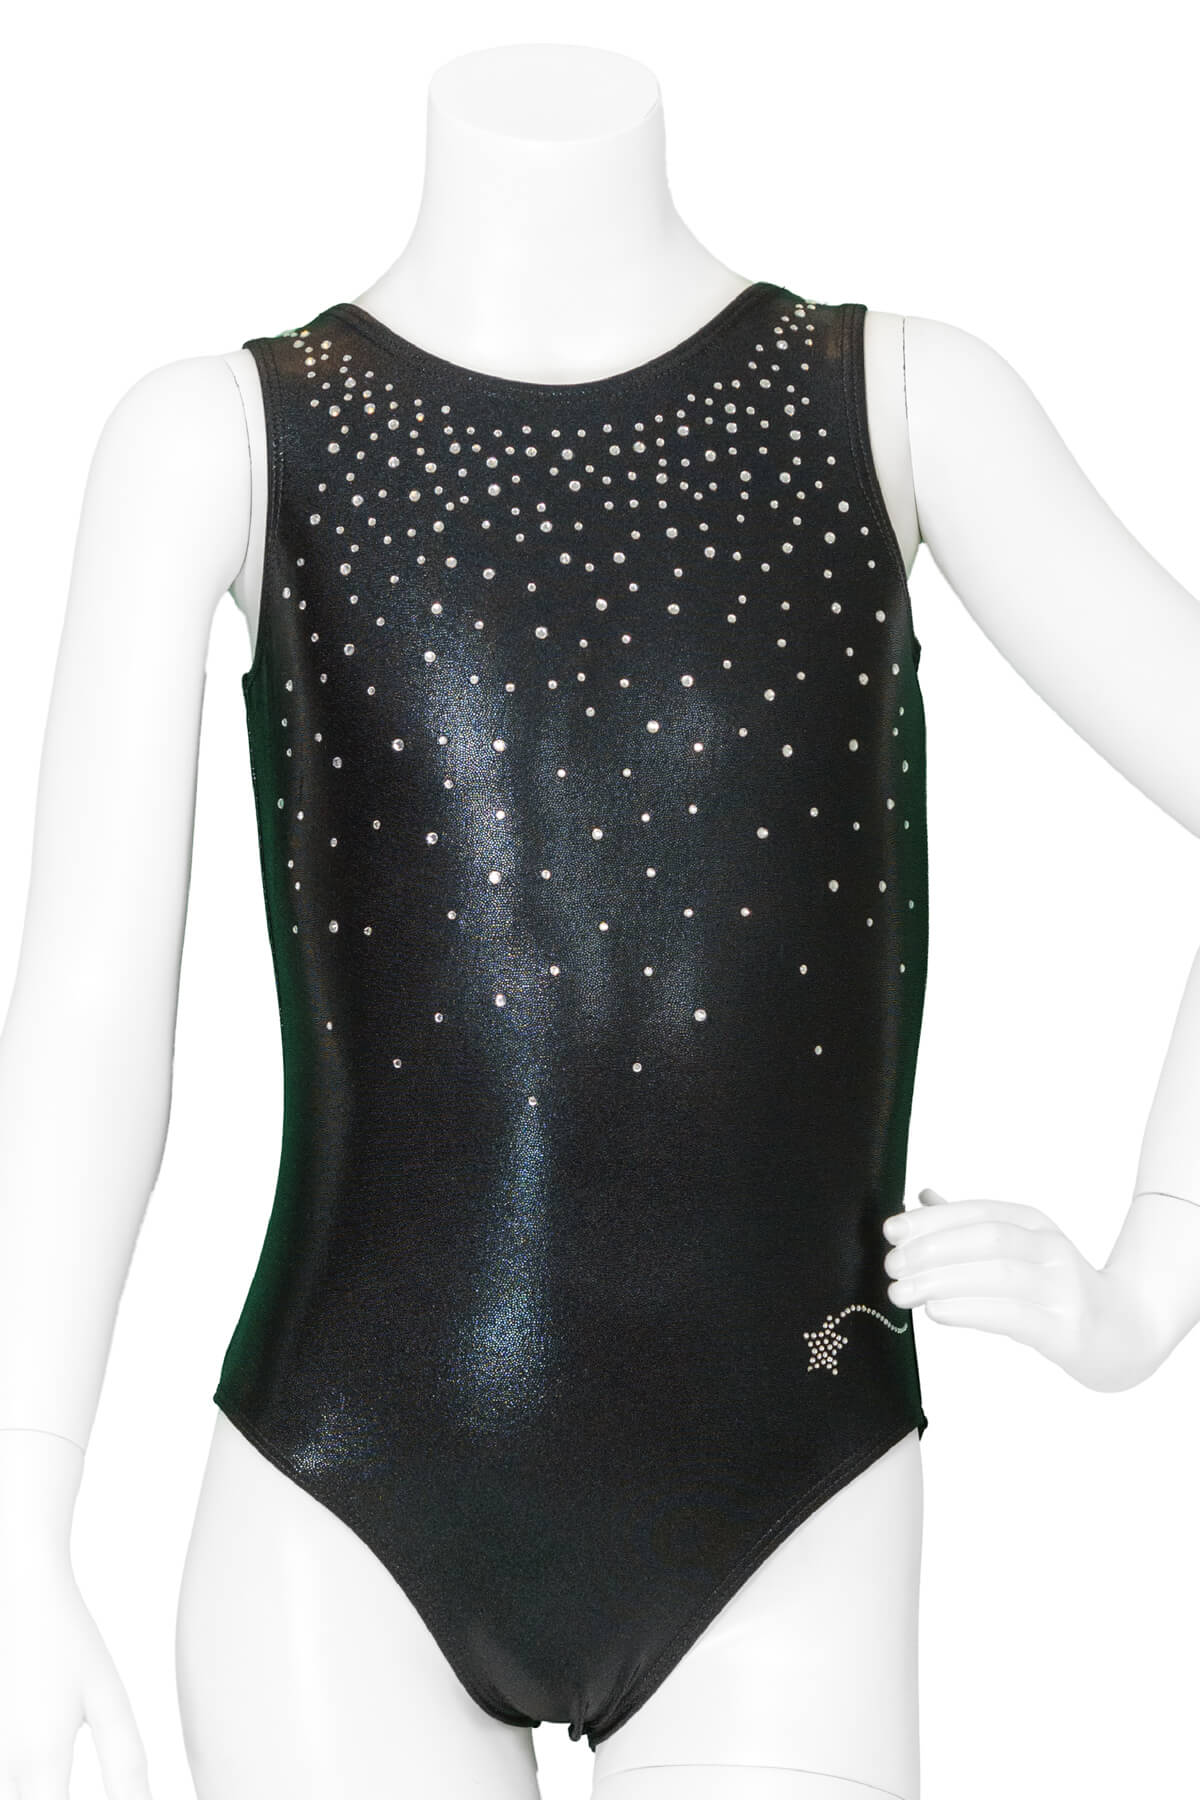 Black sparkle leotard for gymnastics and dance, Destira, 2023